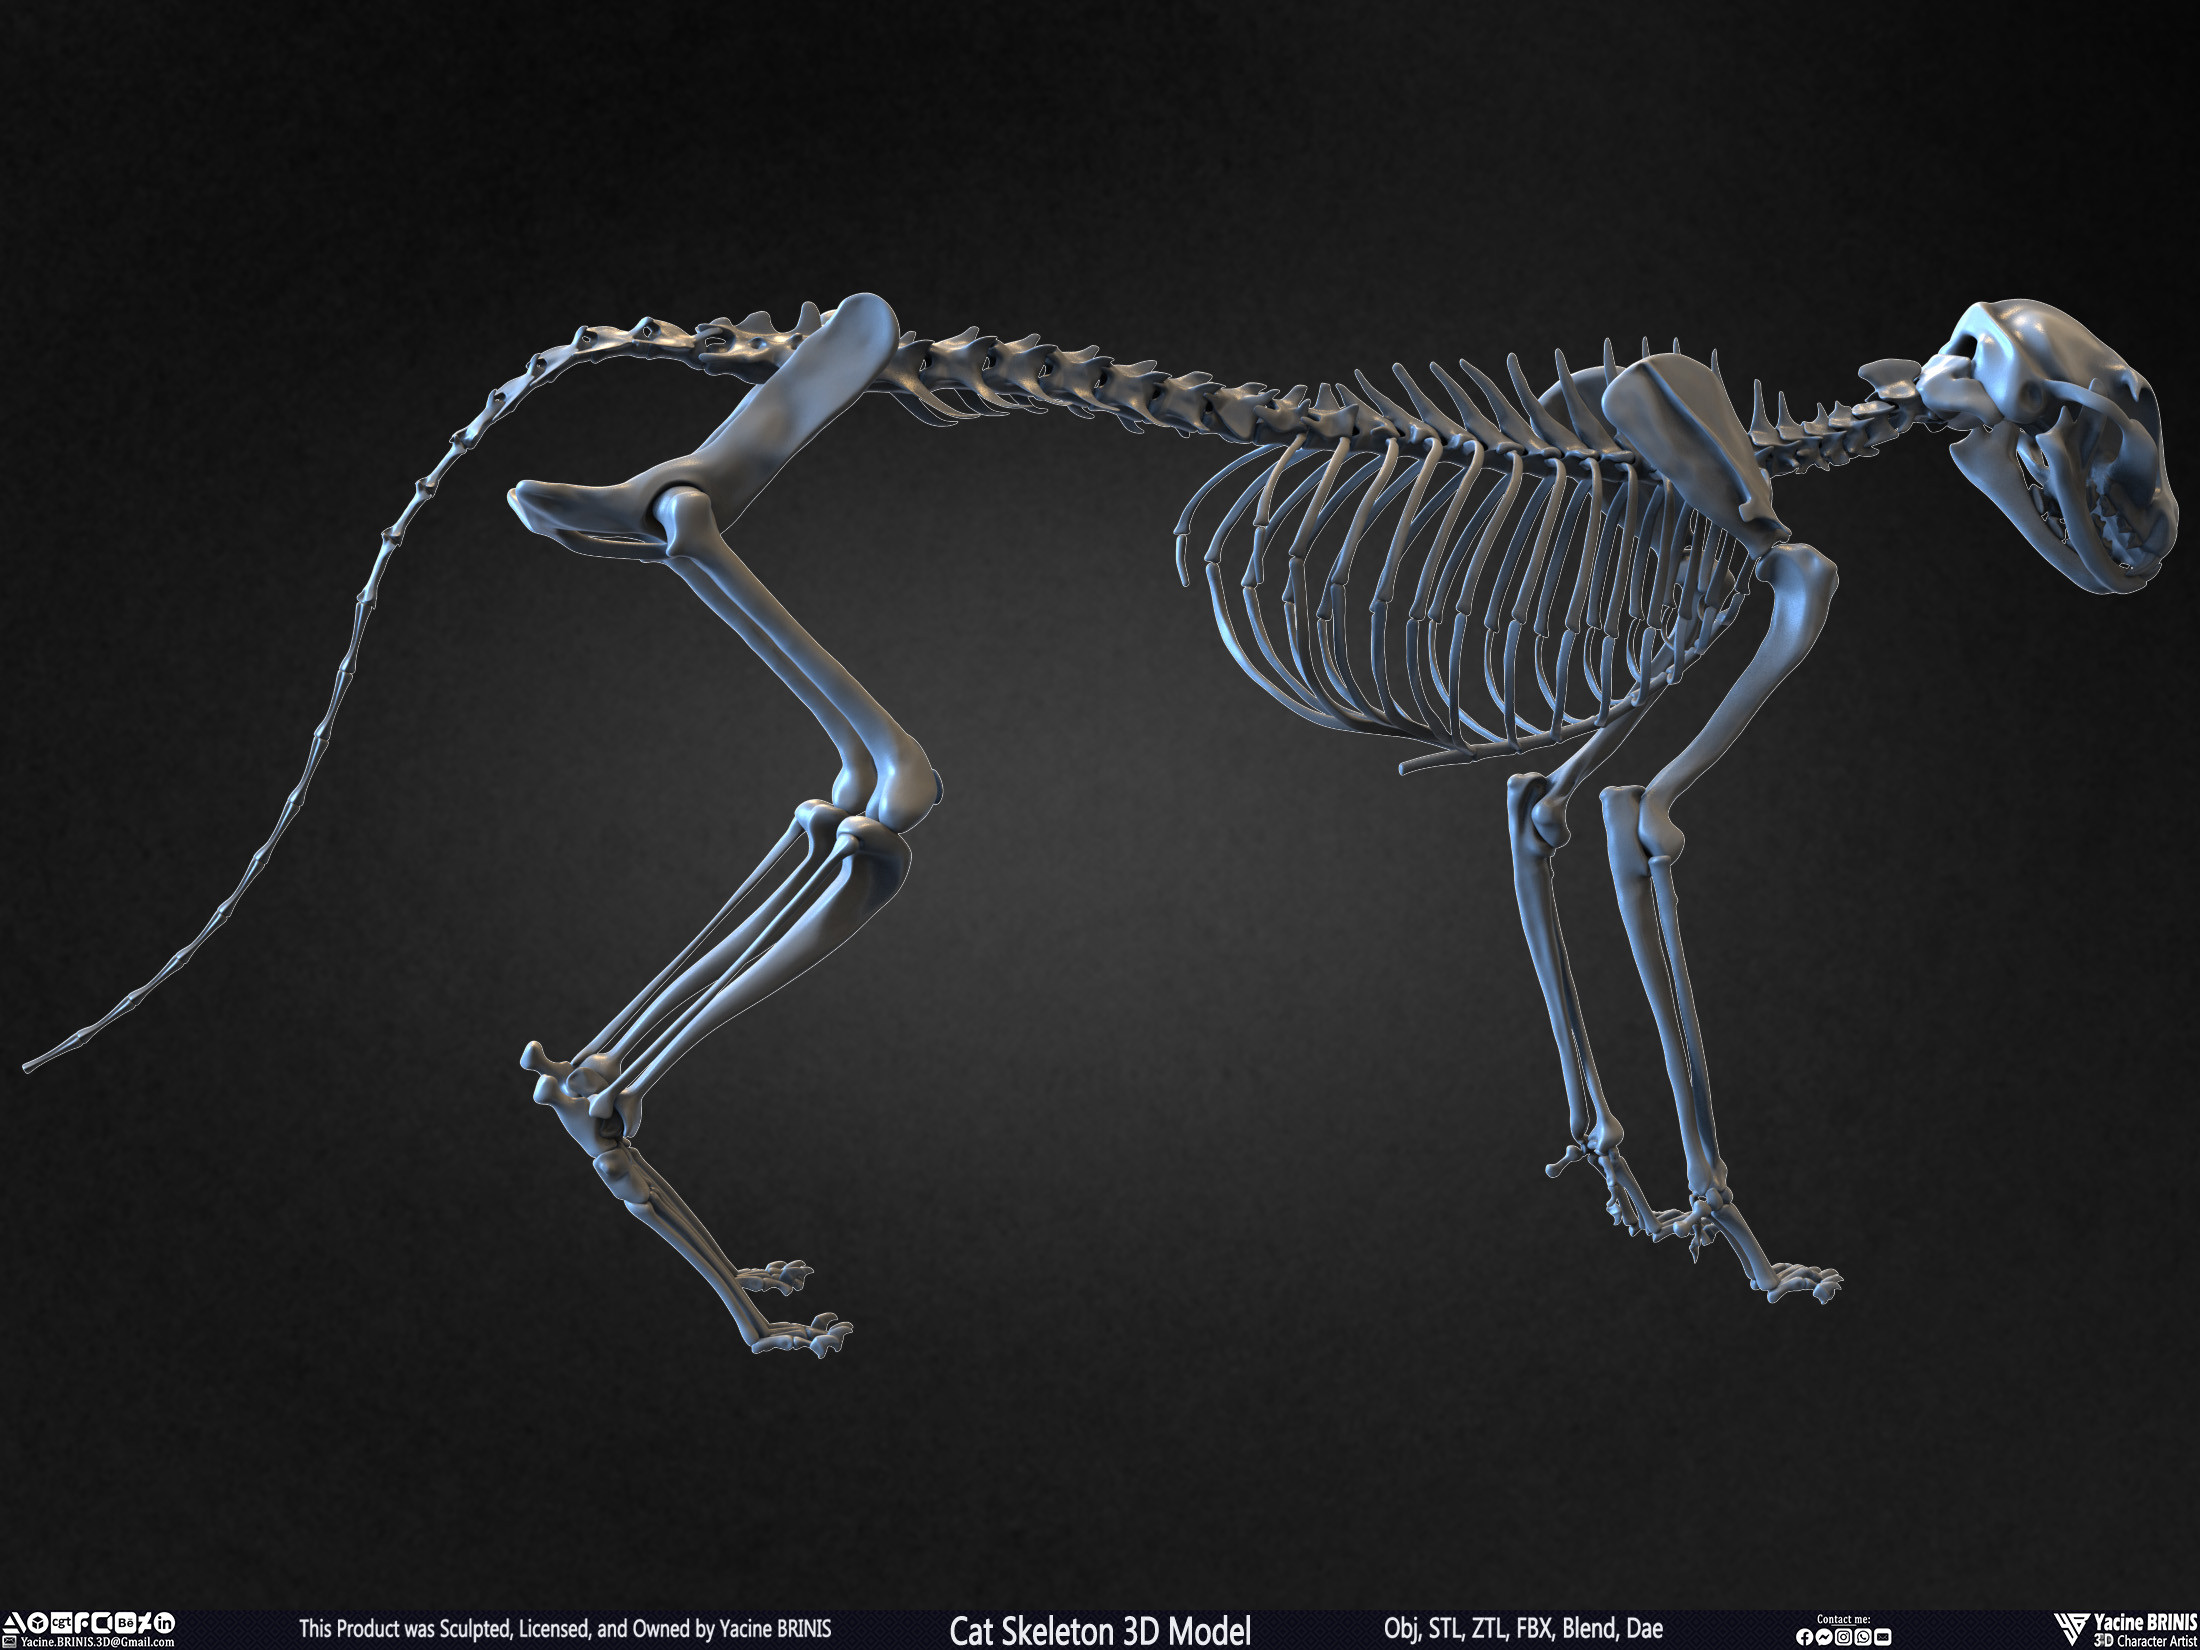 Highly Detailed Cat Skeleton 3D Model Sculpted by Yacine BRINIS Set 023